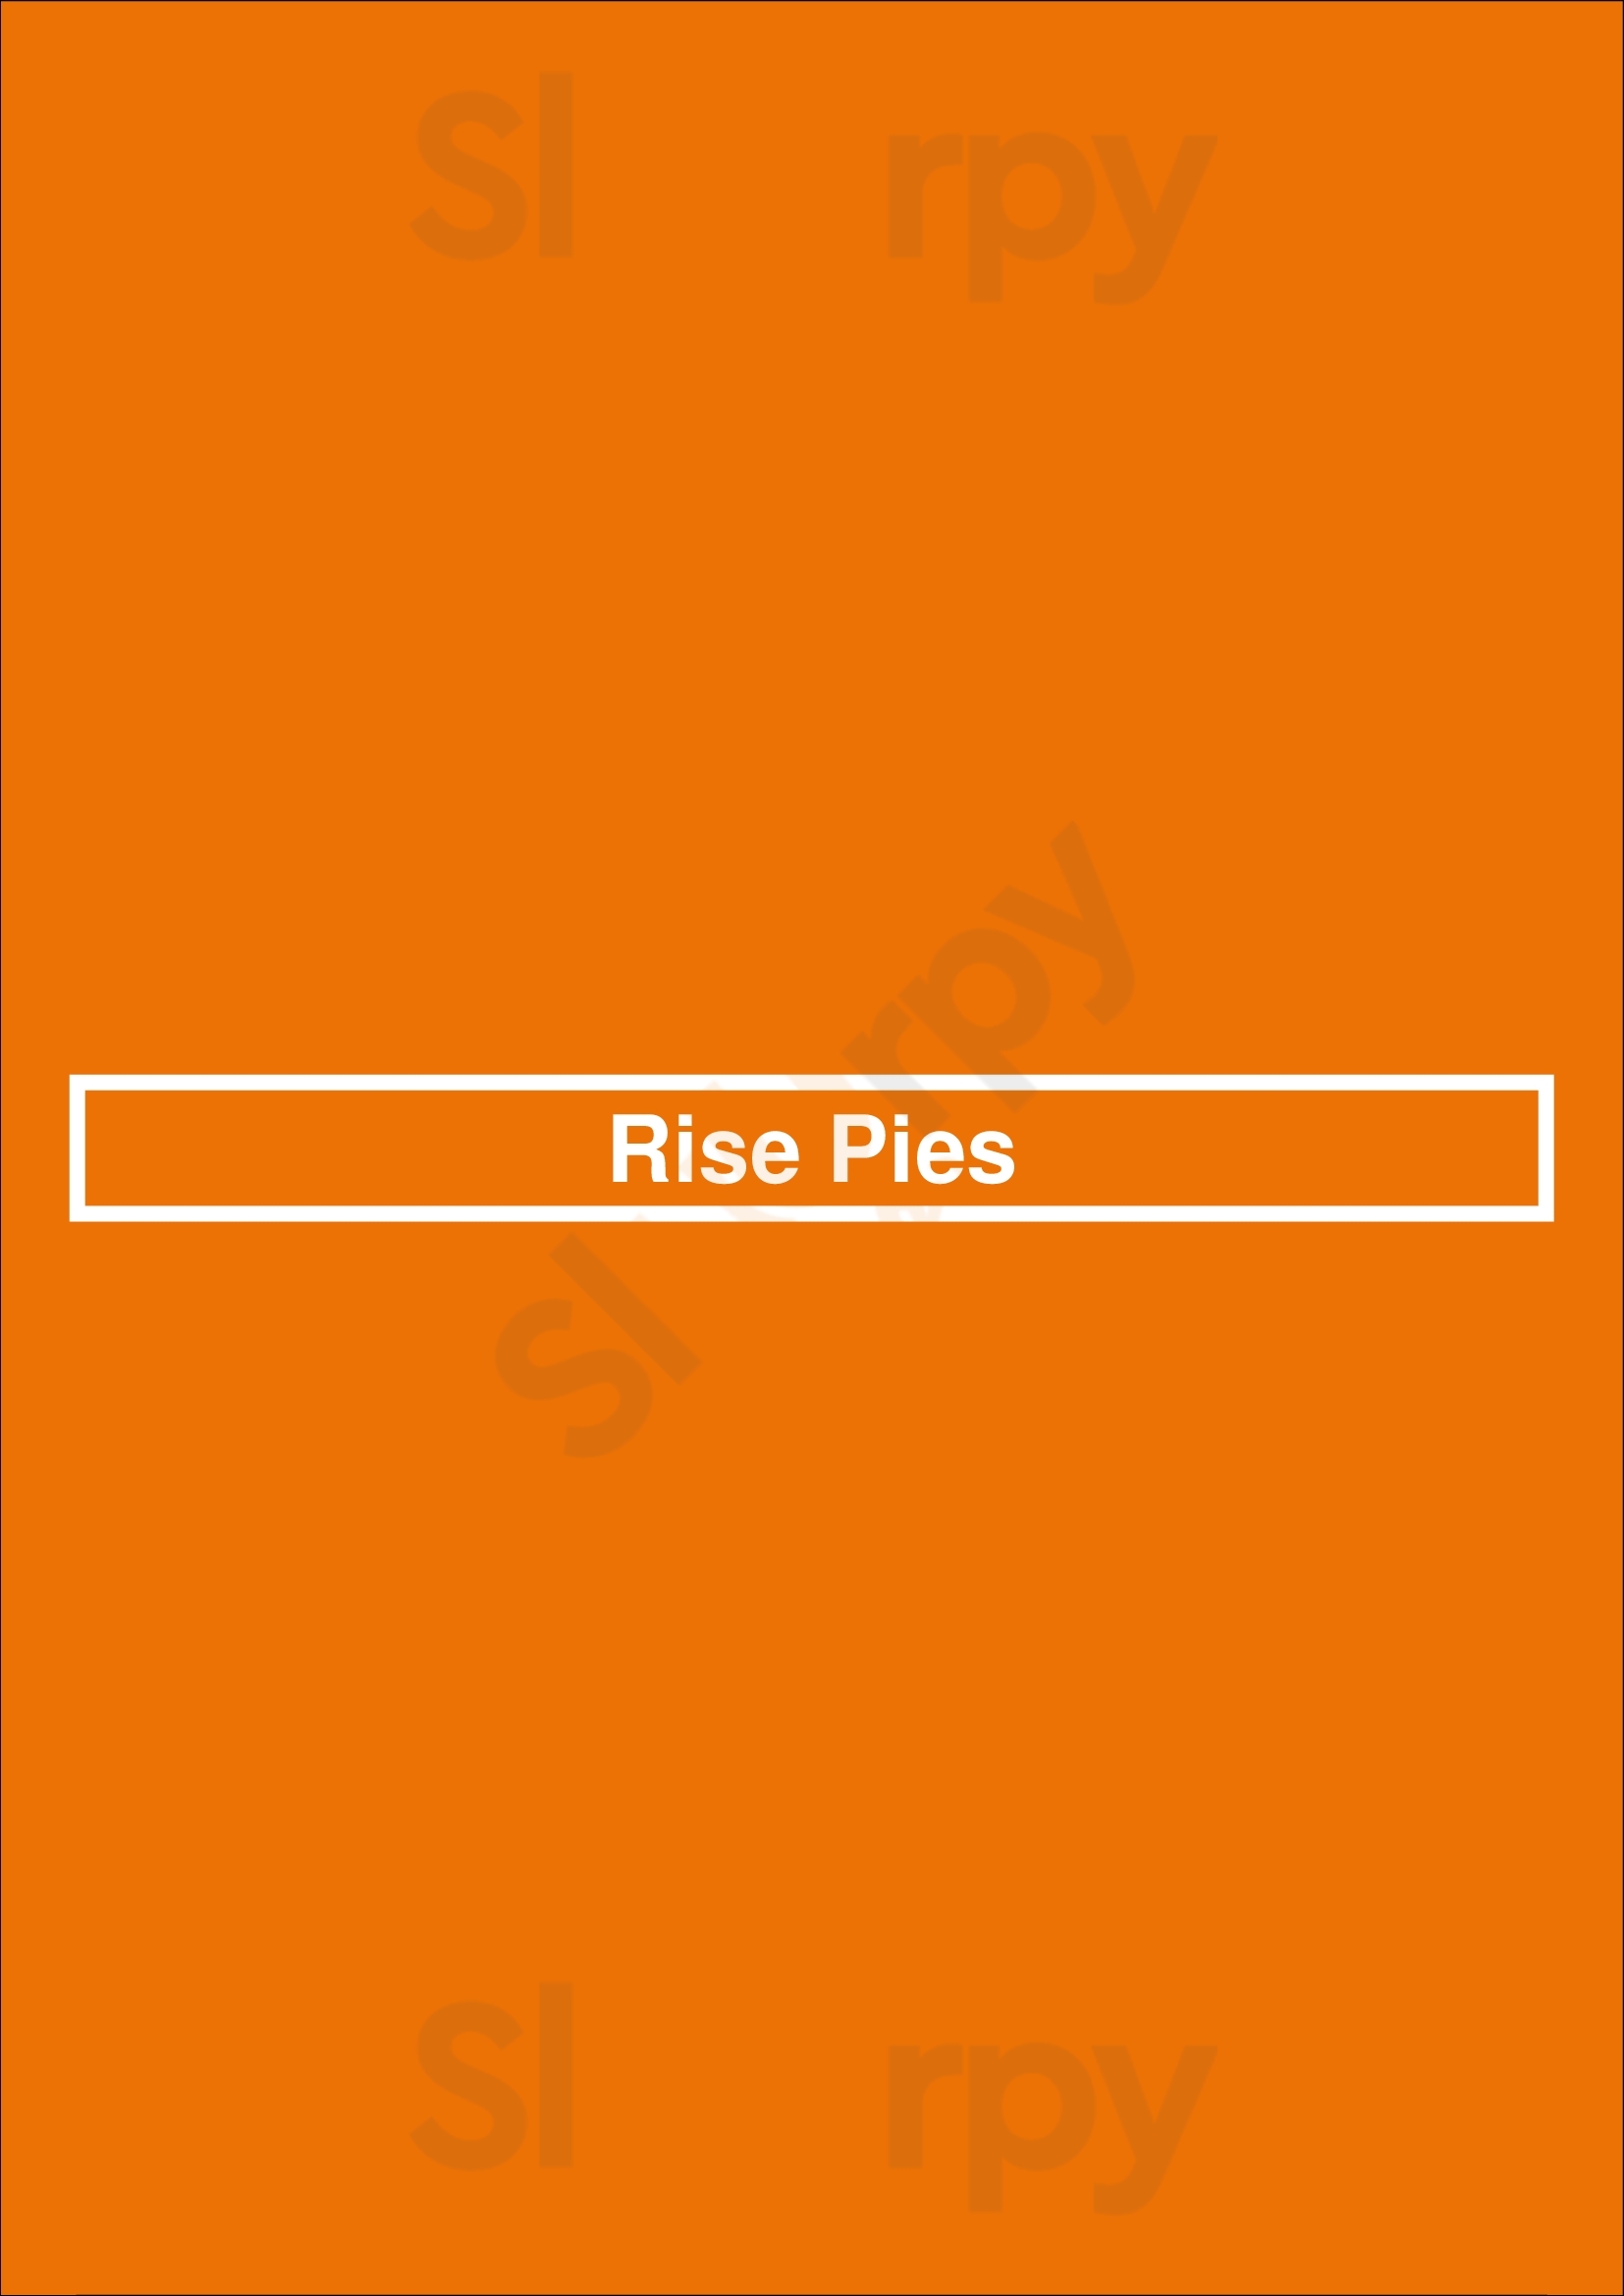 Rise Pies Denver Menu - 1